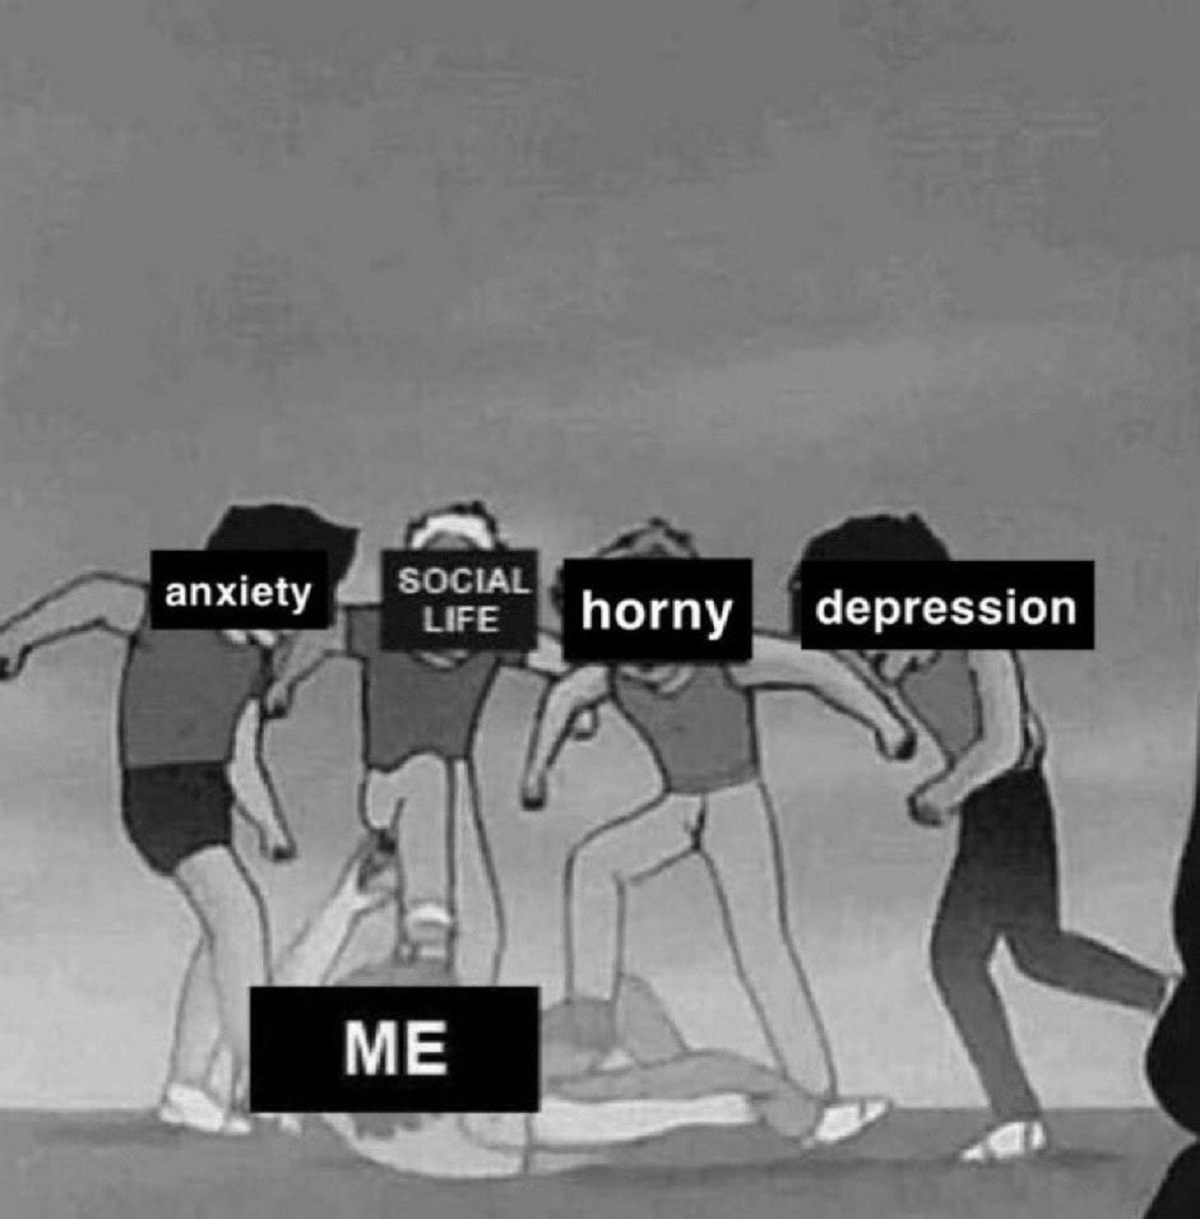 me vs life meme - anxiety Social Life horny depression Me